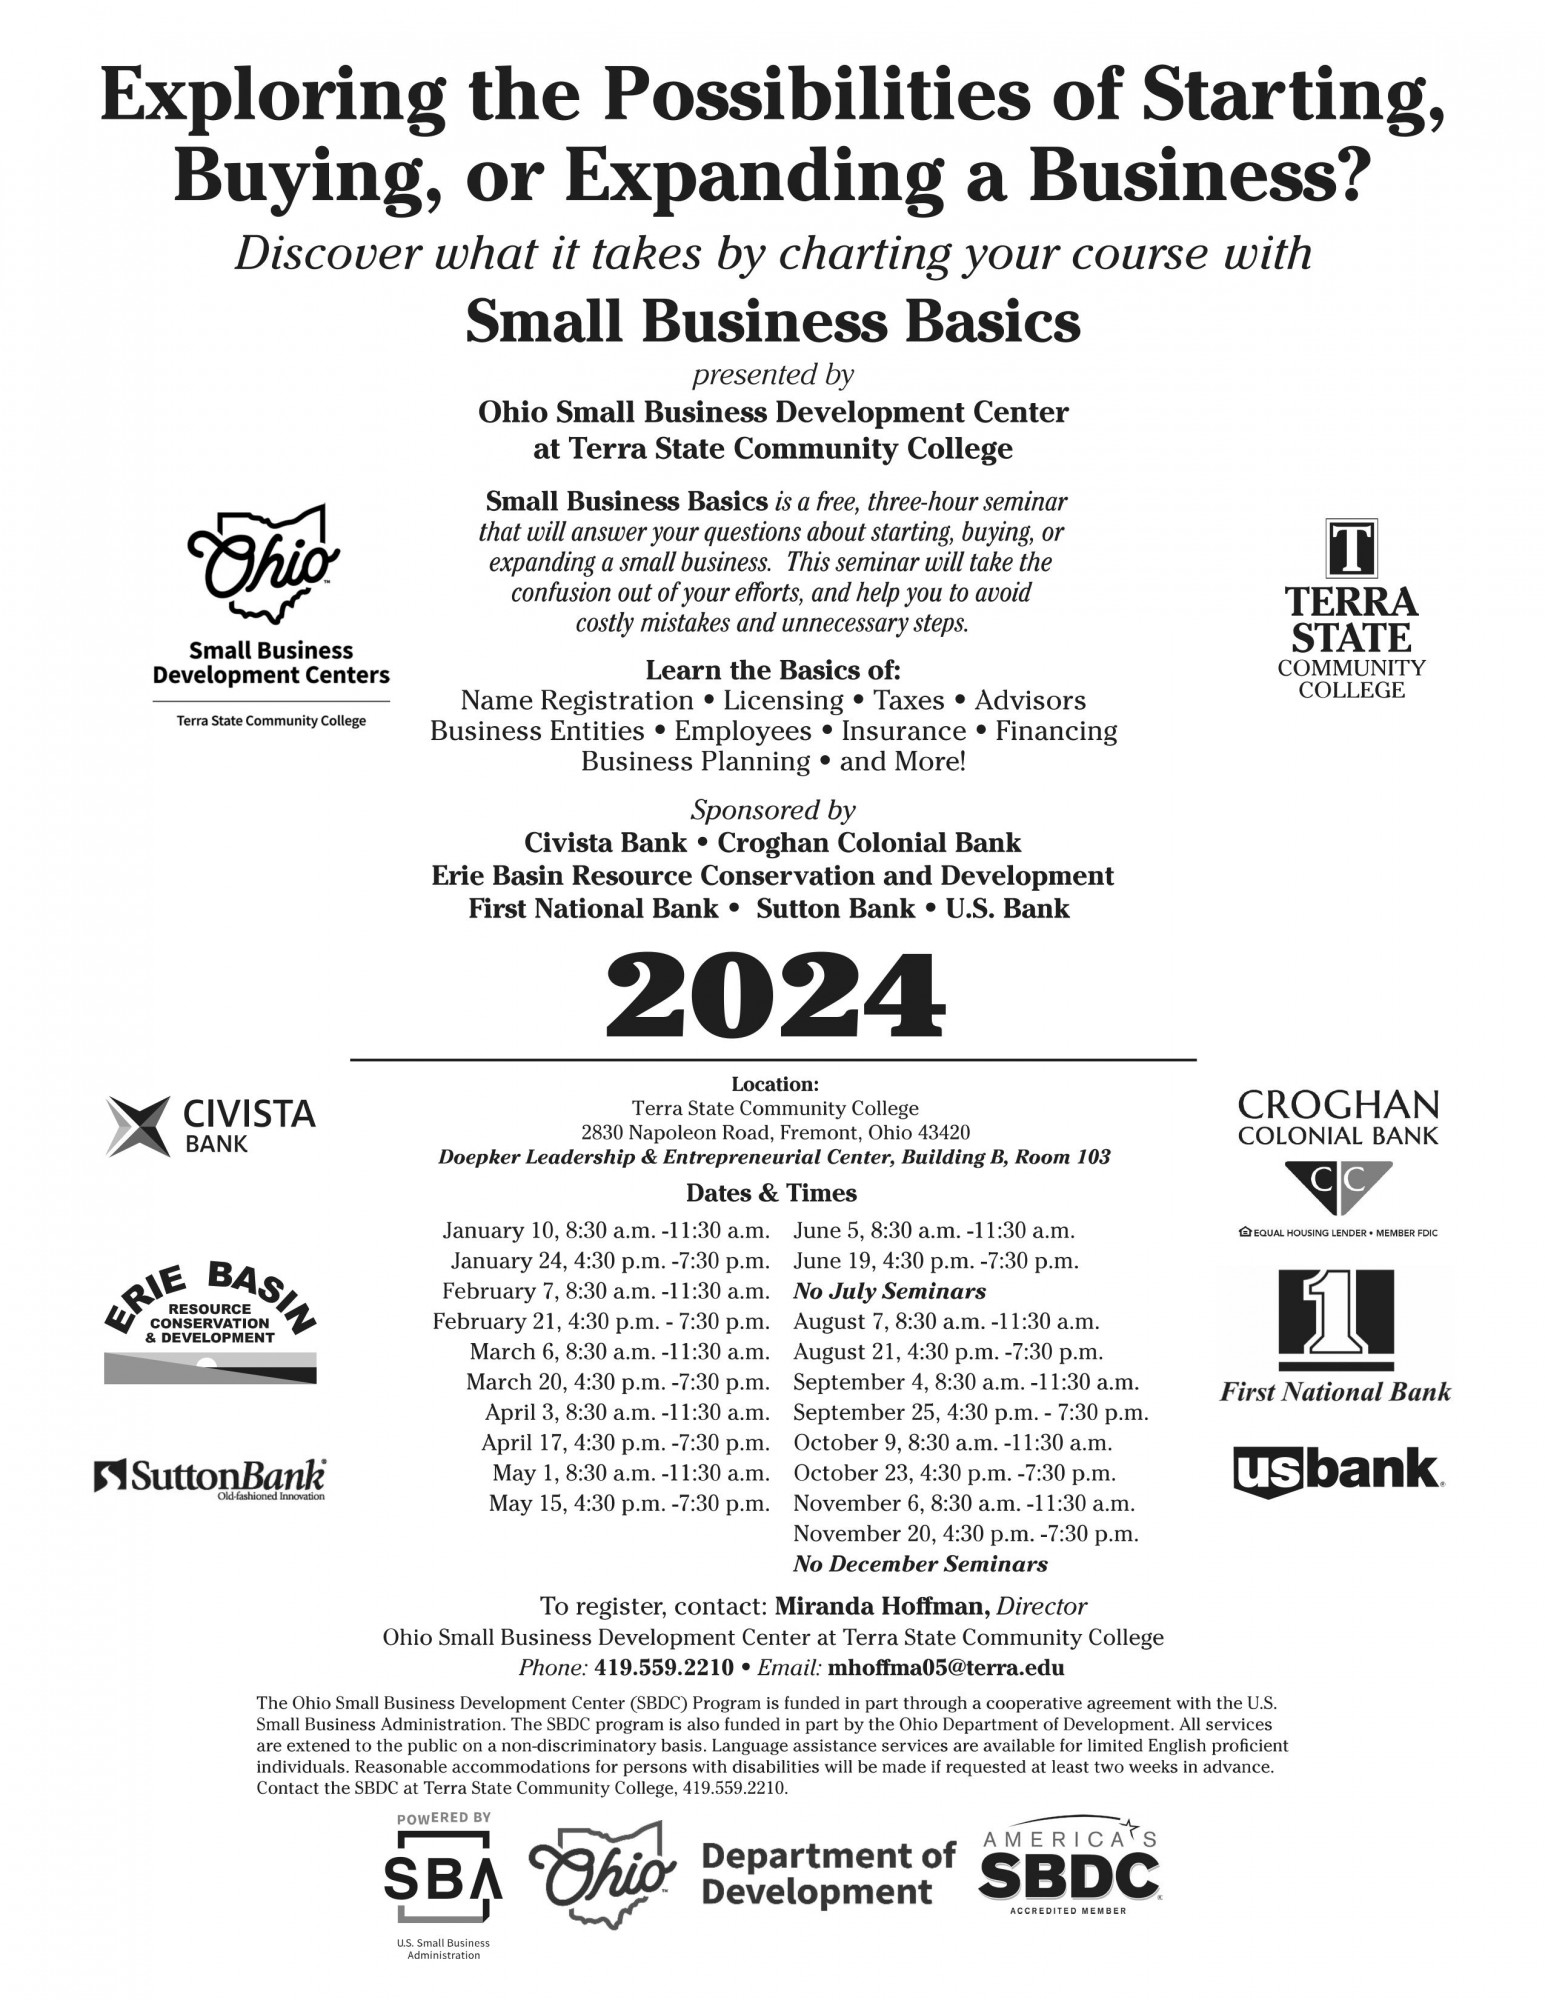 Small Business Basics Seminar